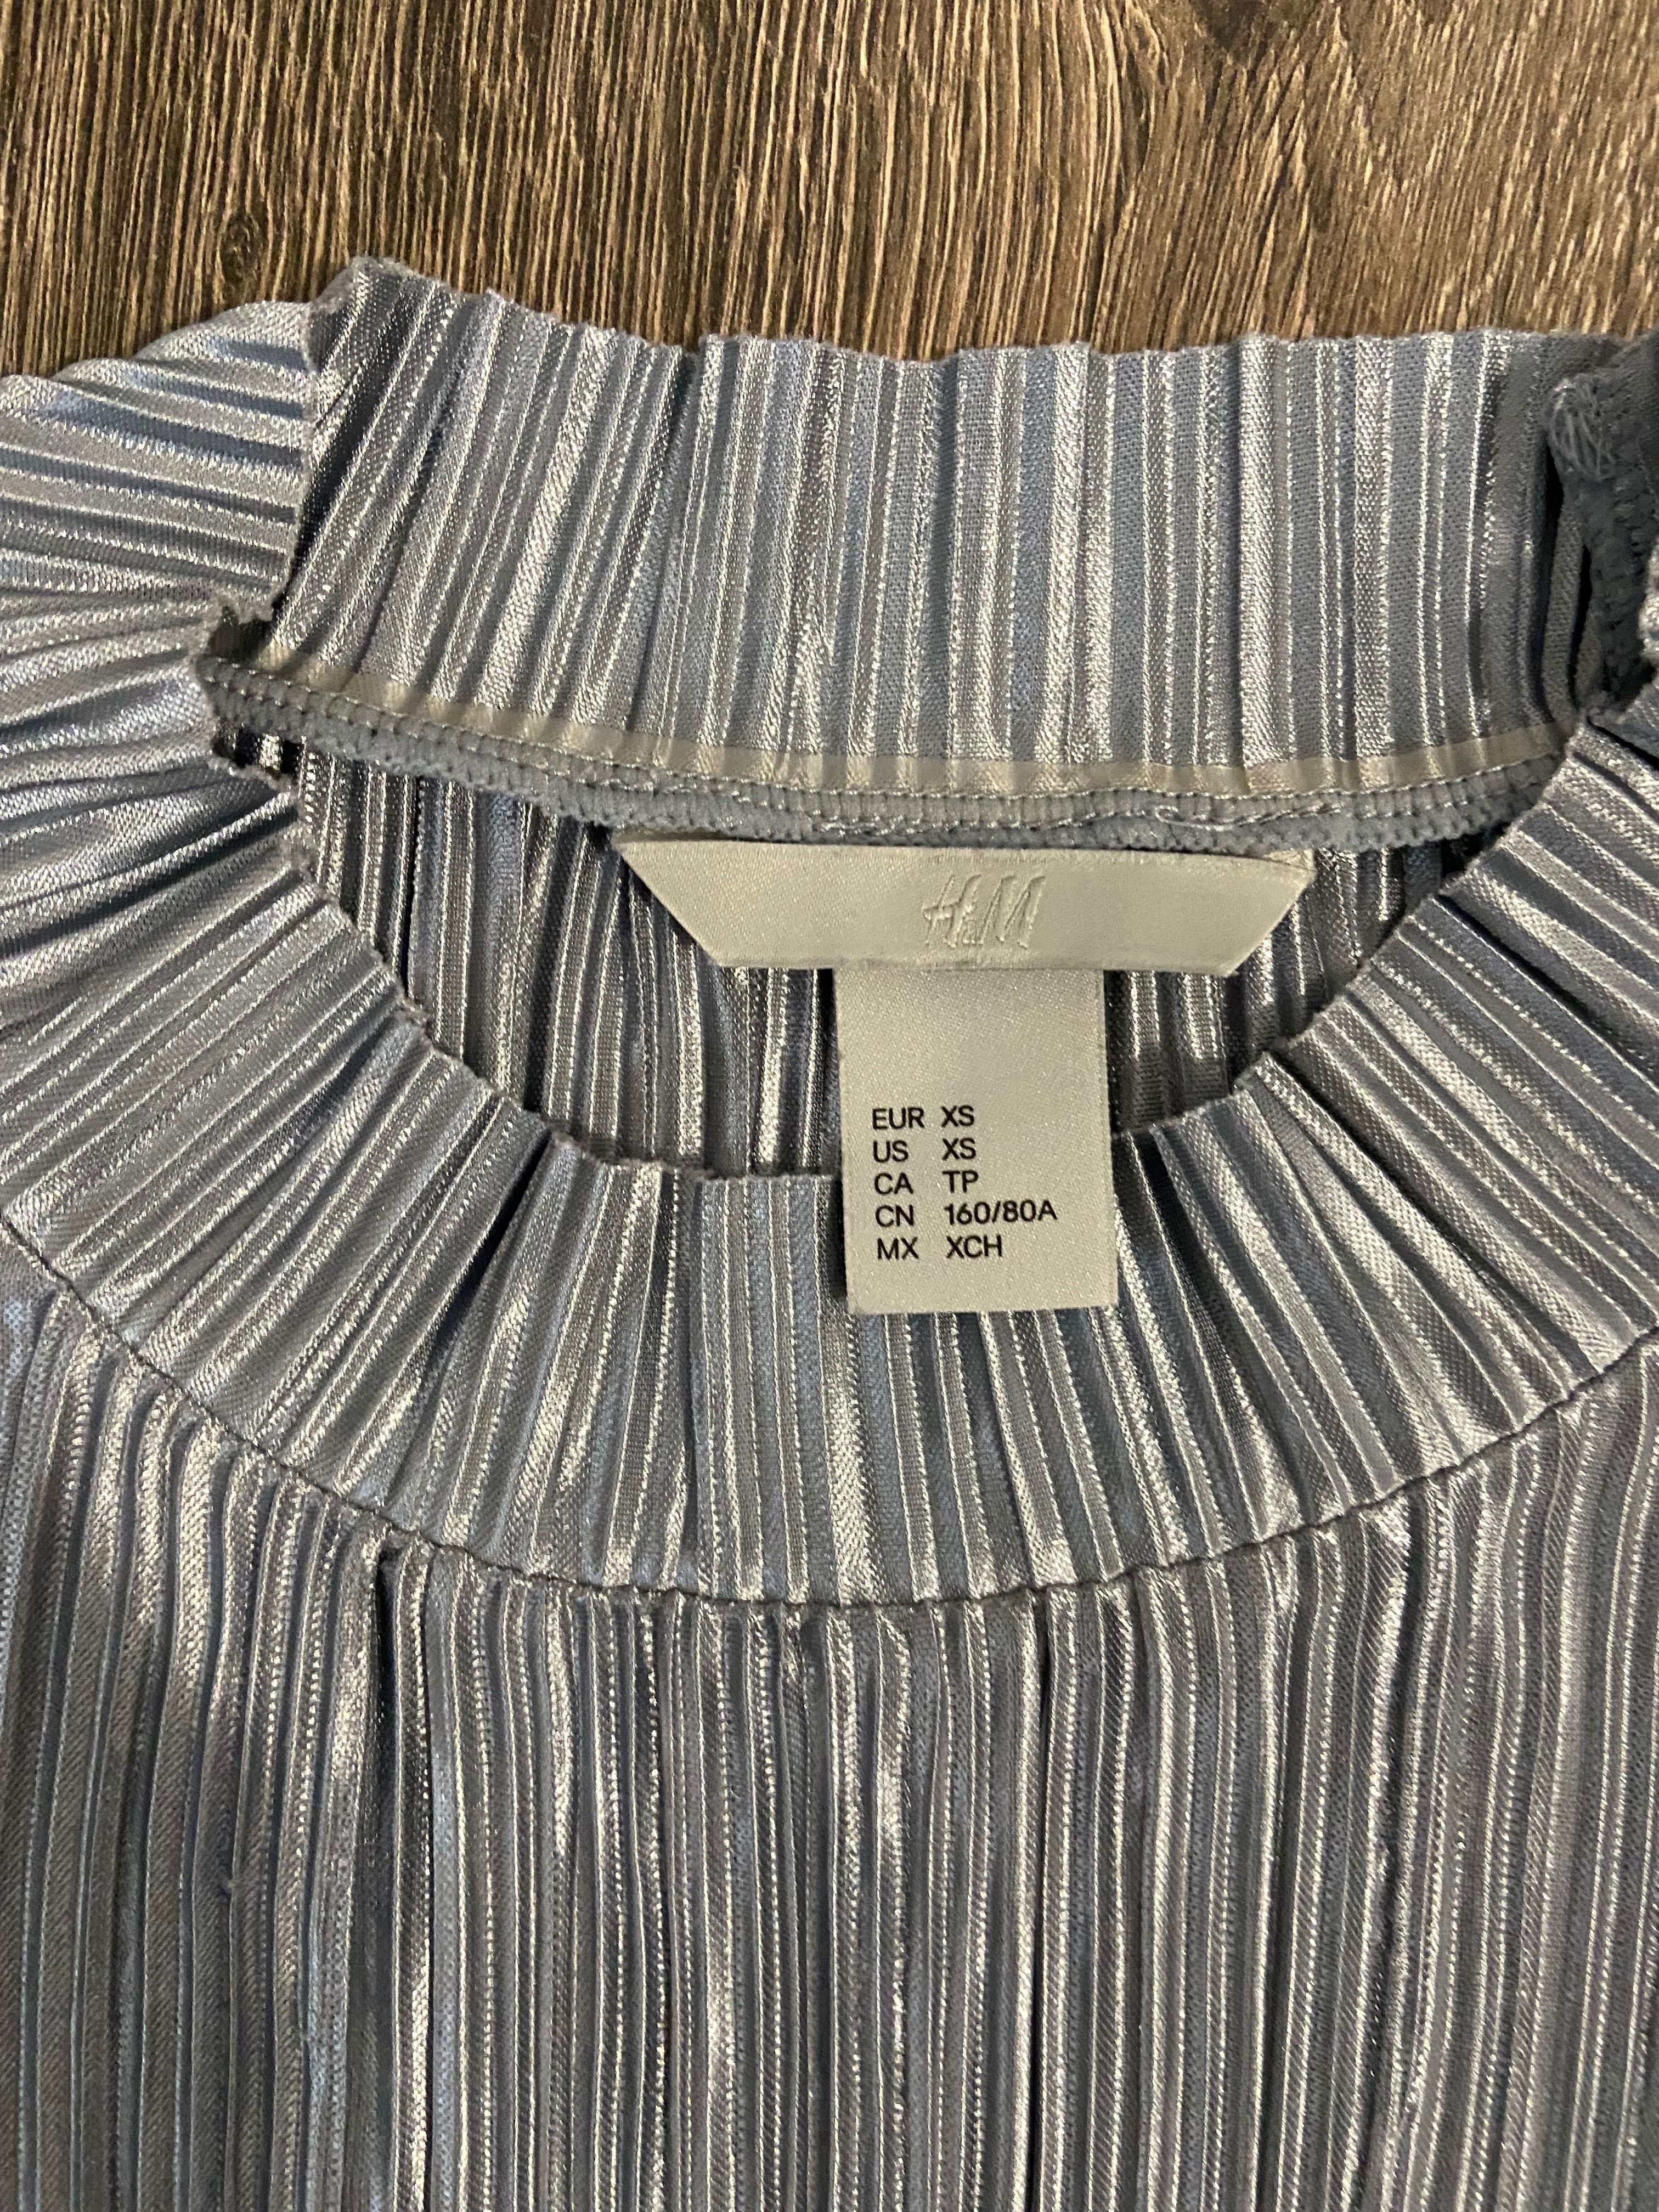 Bluza dama H&M argintie cu striatii